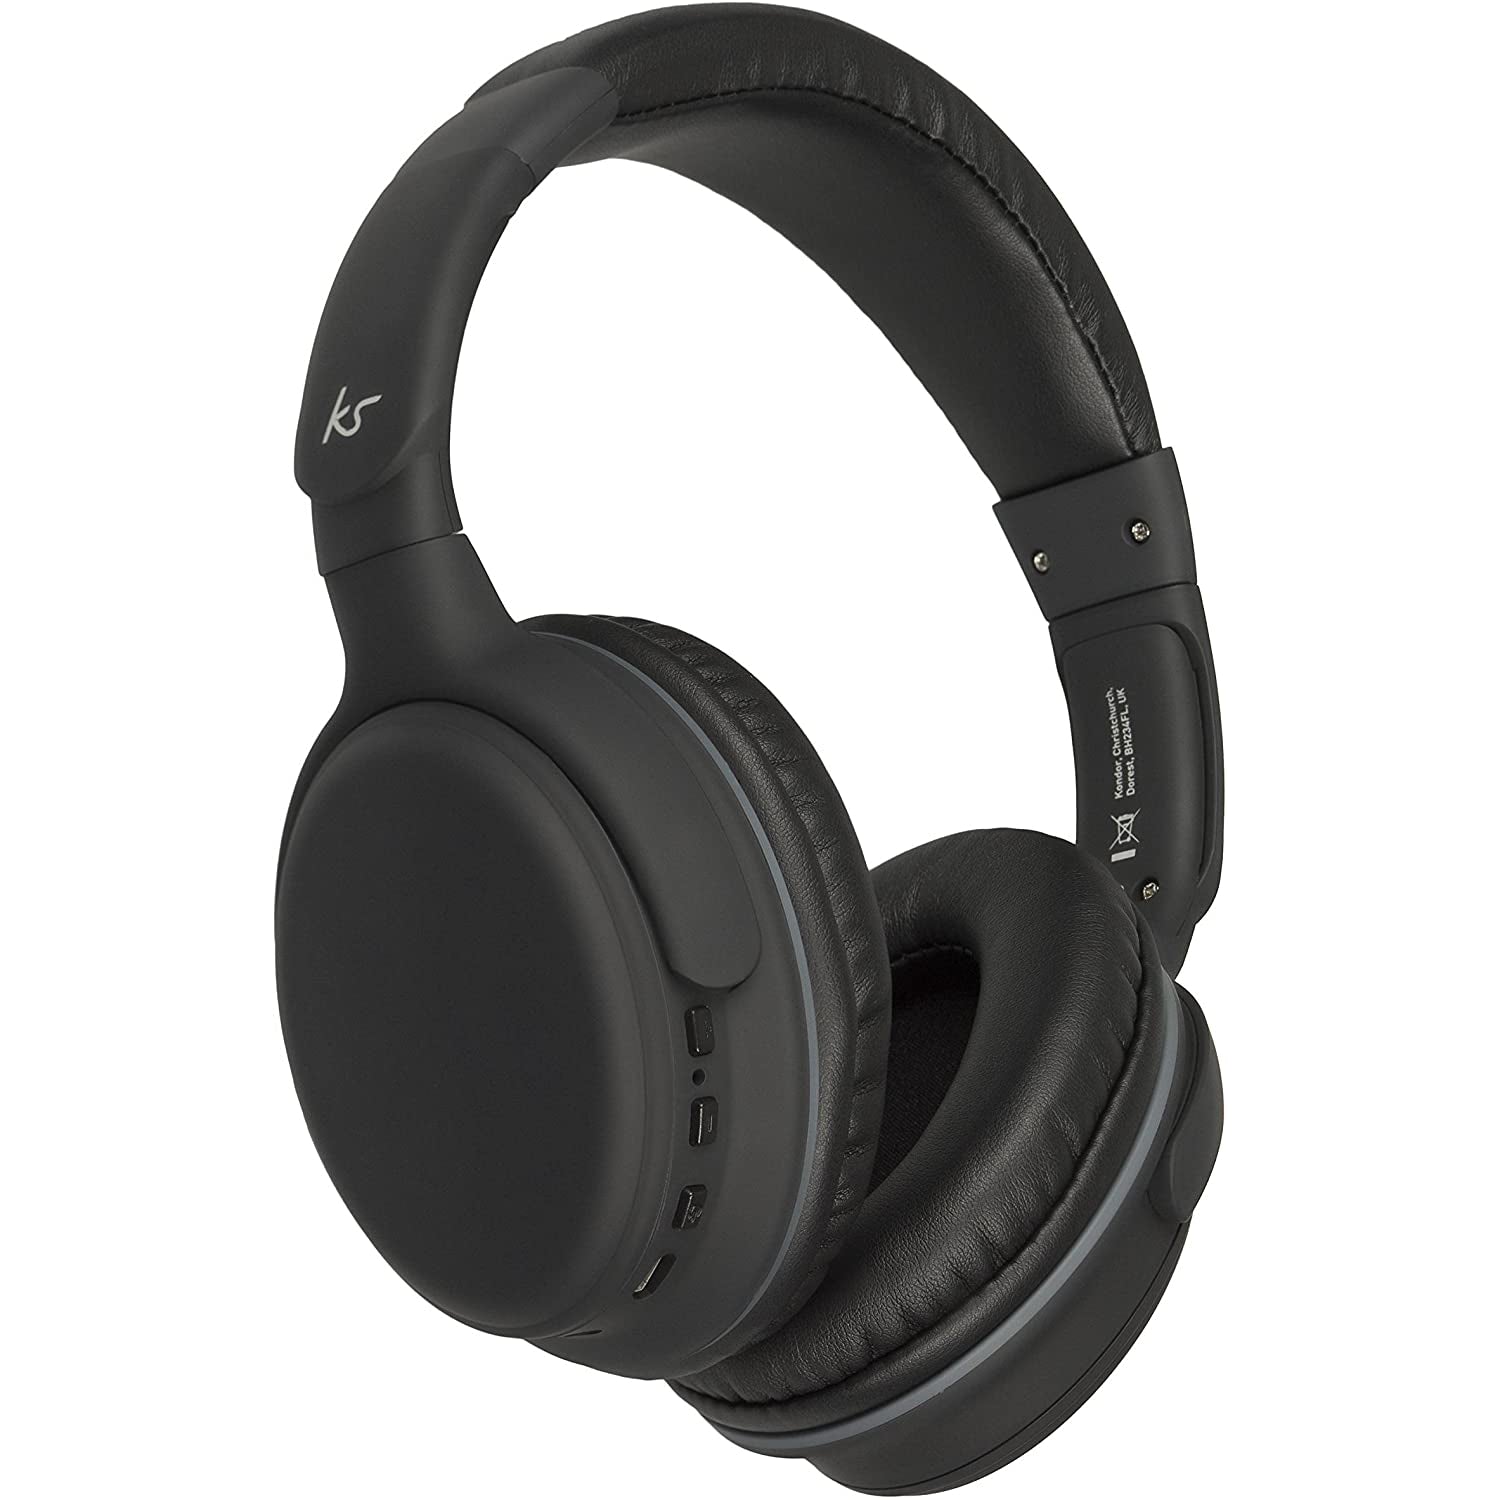 KitSound Slammers Wireless On-Ear Headphones - Black - Refurbished Pristine